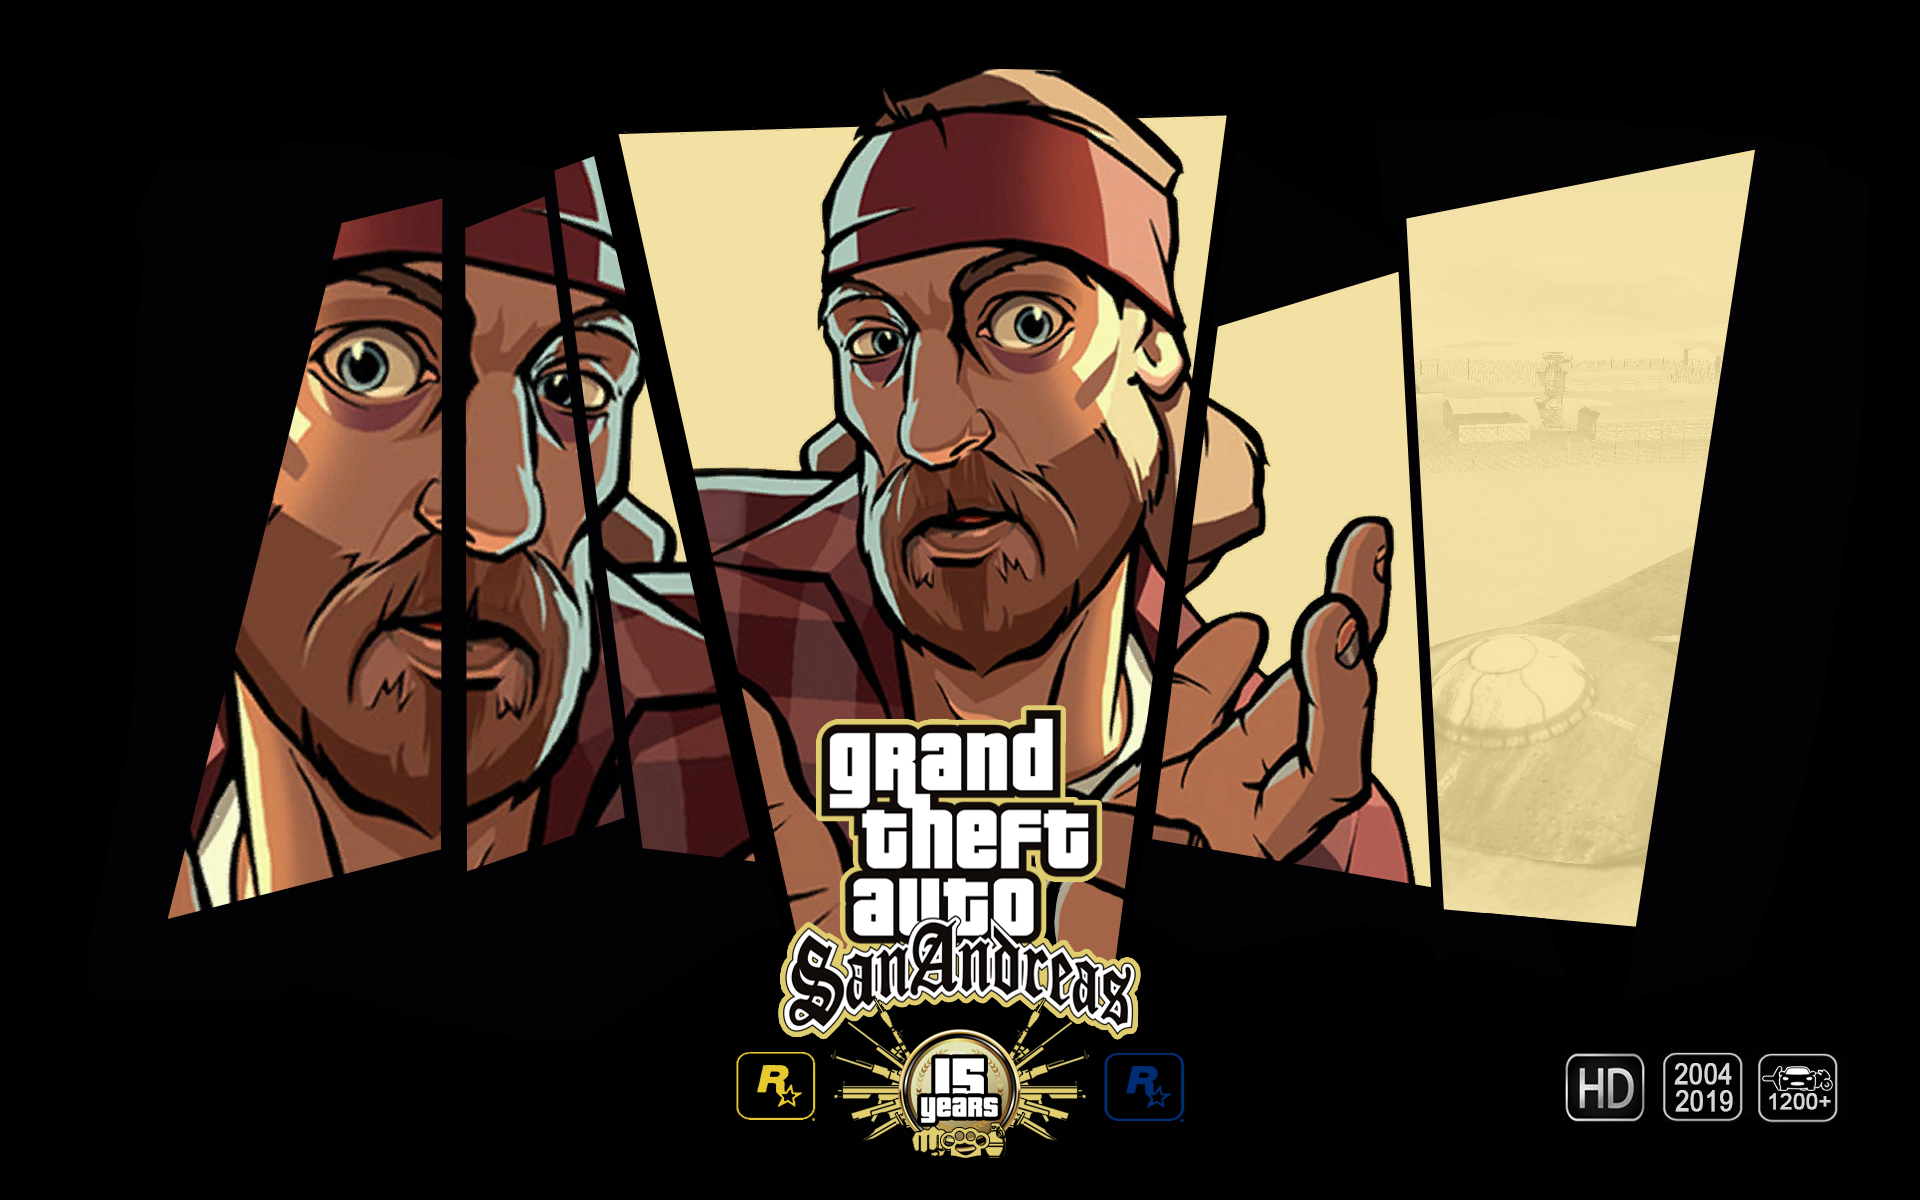 Wallpaper, GTA anniversary, GTA San Andreas, Grand Theft Auto, game poster, video games 1920x1200